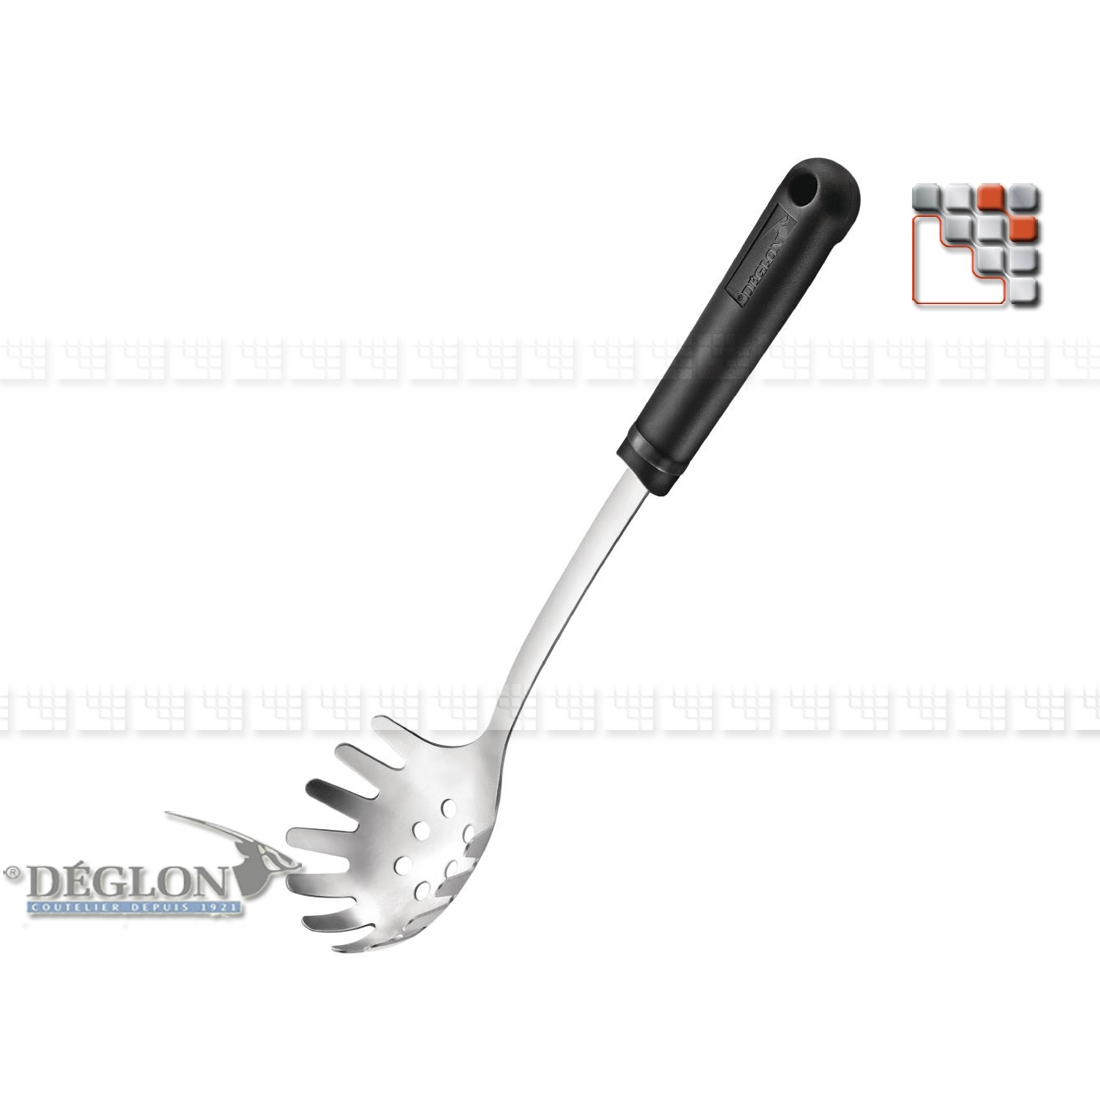 Spaghetti spoon DEGLON L10-C3845018SD DEGLON® Tableware